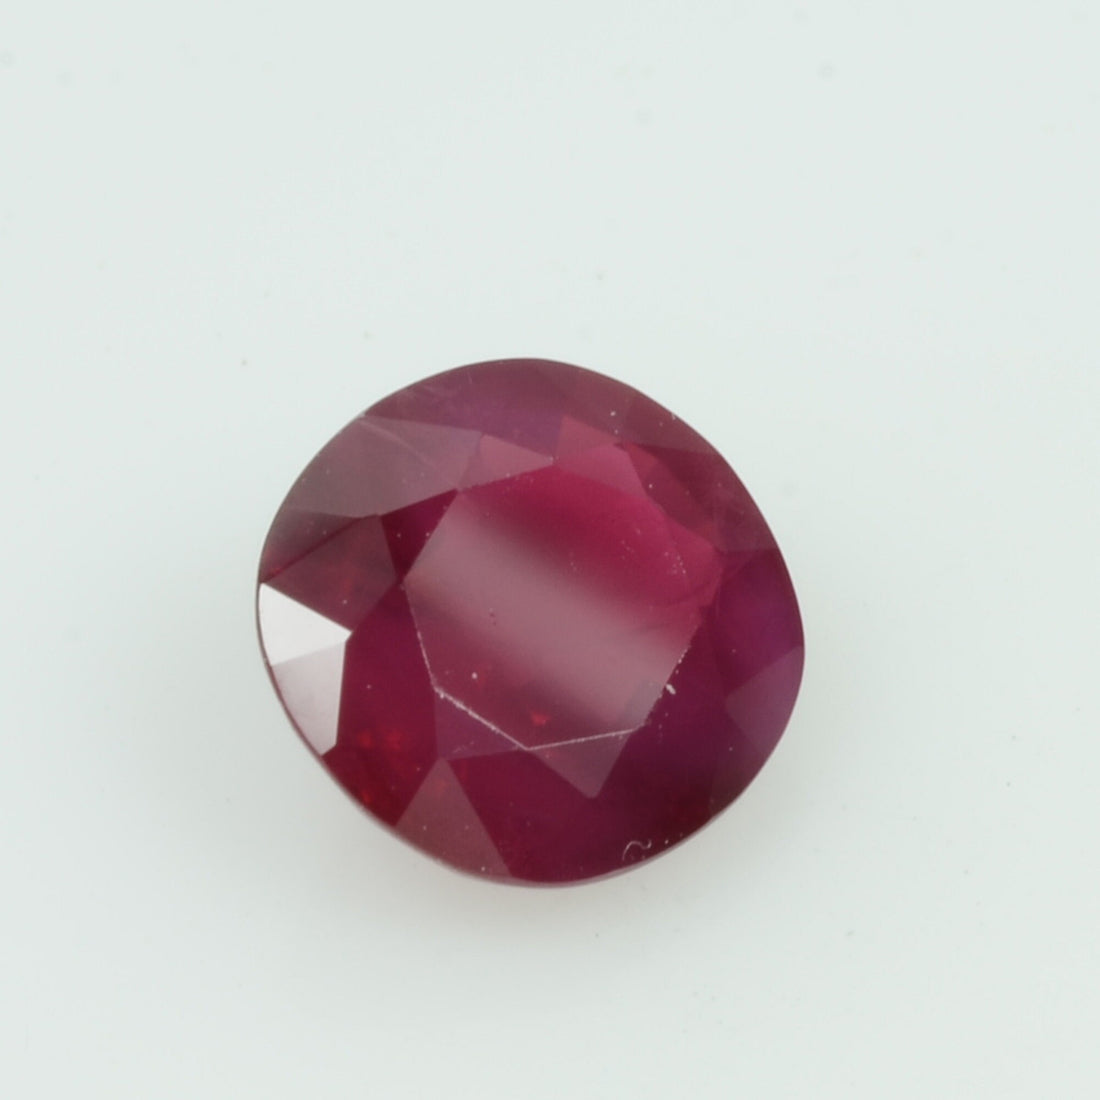 0.98 Cts Natural Burma Ruby Loose Gemstone Roundish Oval Cut